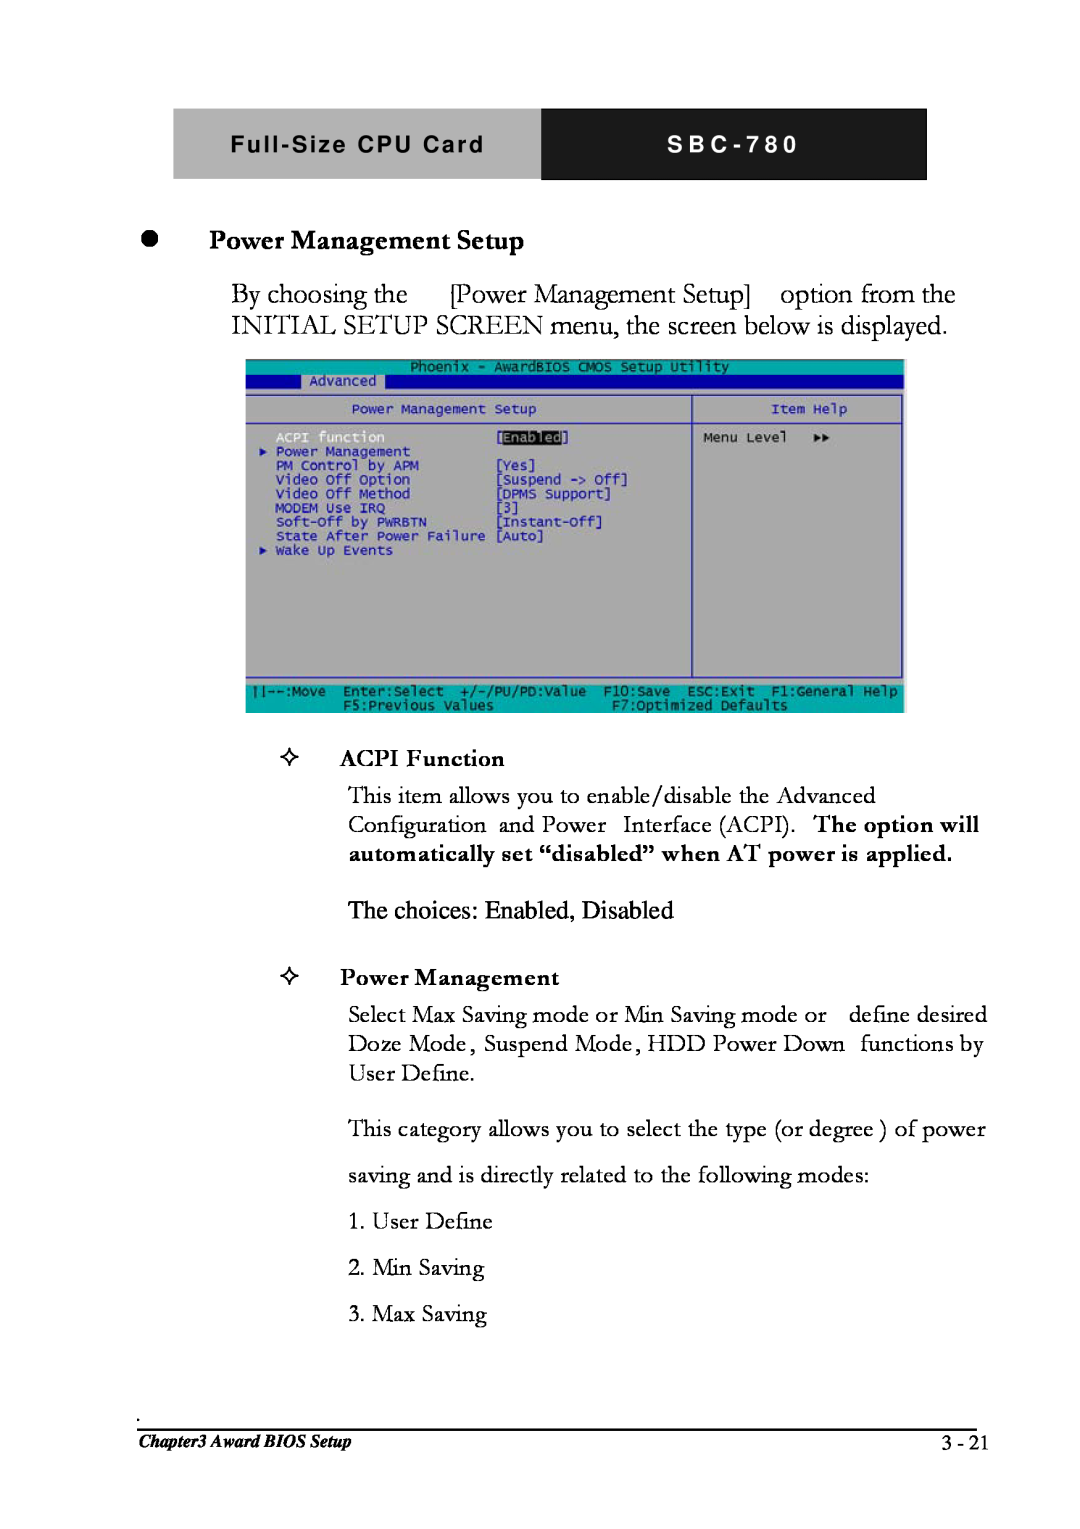 Intel SBC-780 manual Power Management Setup, ACPI Function, Power Management 